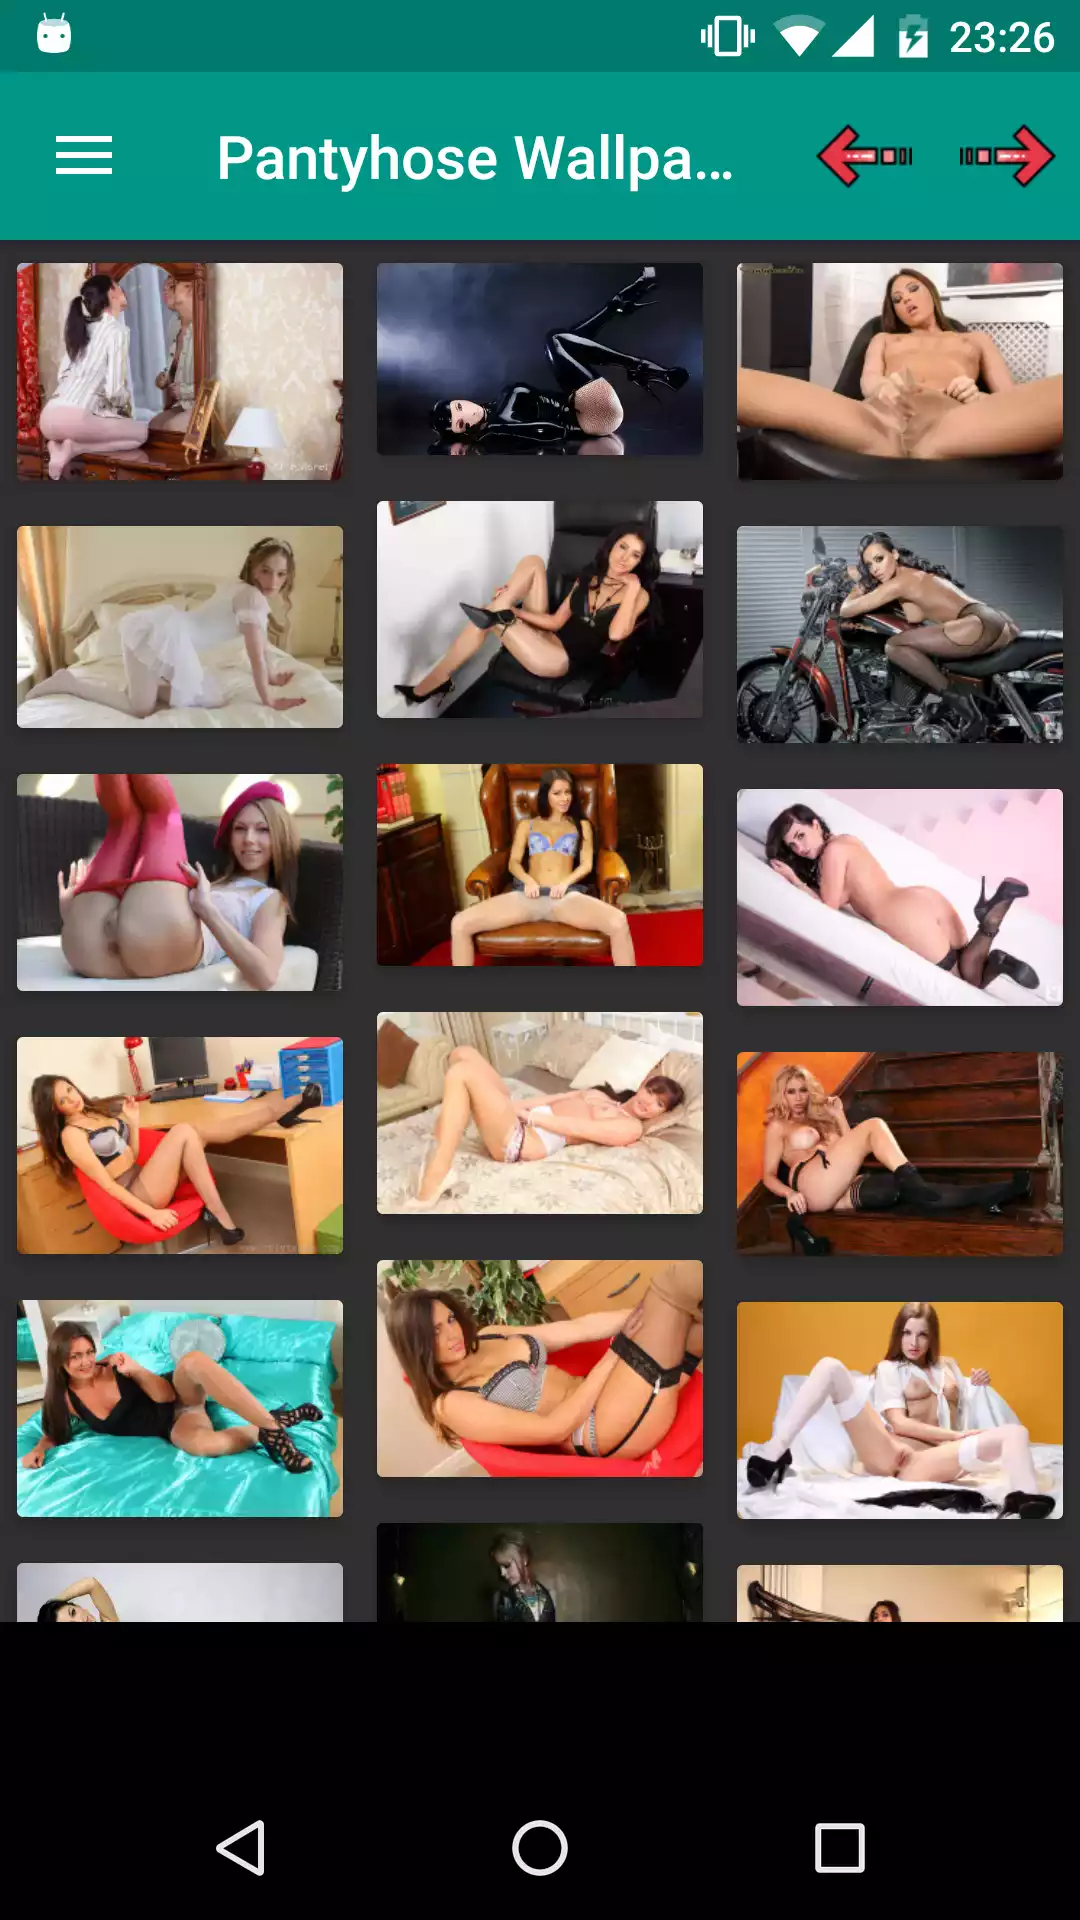 Pantyhouse backgrounds apps,sexy,gallery,fetish,wallpapers,photos,hentai,pics,free,hot,amateur,strapon,tits,app,nylon,pornstars,anime,pantyhouse,sexgalleries,aplikasi,erotic,manga,best,henti,pice